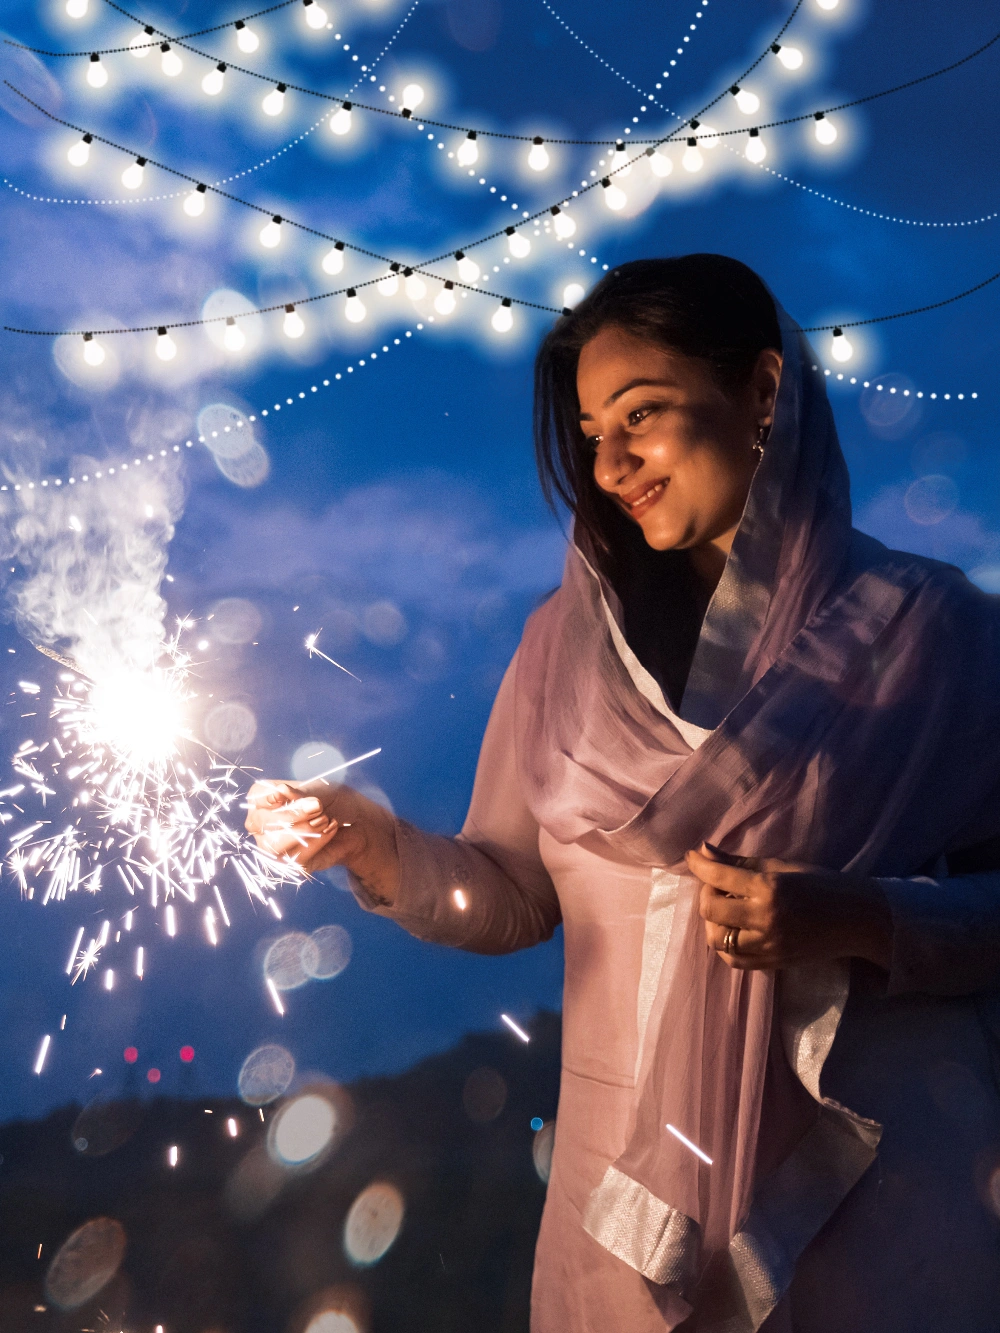 #freetoedit #Diwali #HappyDiwali #DiwaliGlow